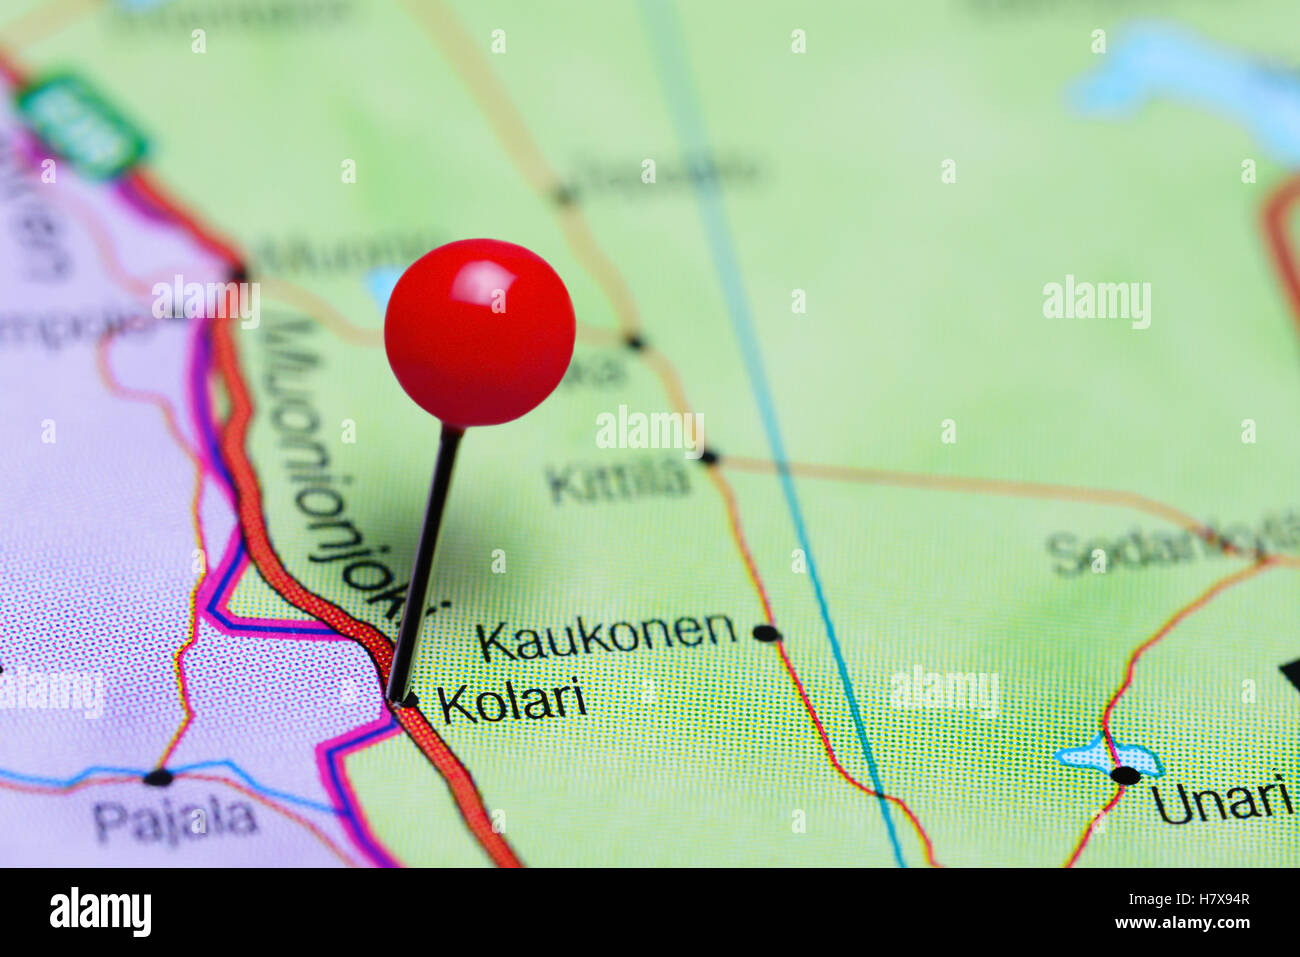 Kolari pinned on a map of Finland Stock Photo